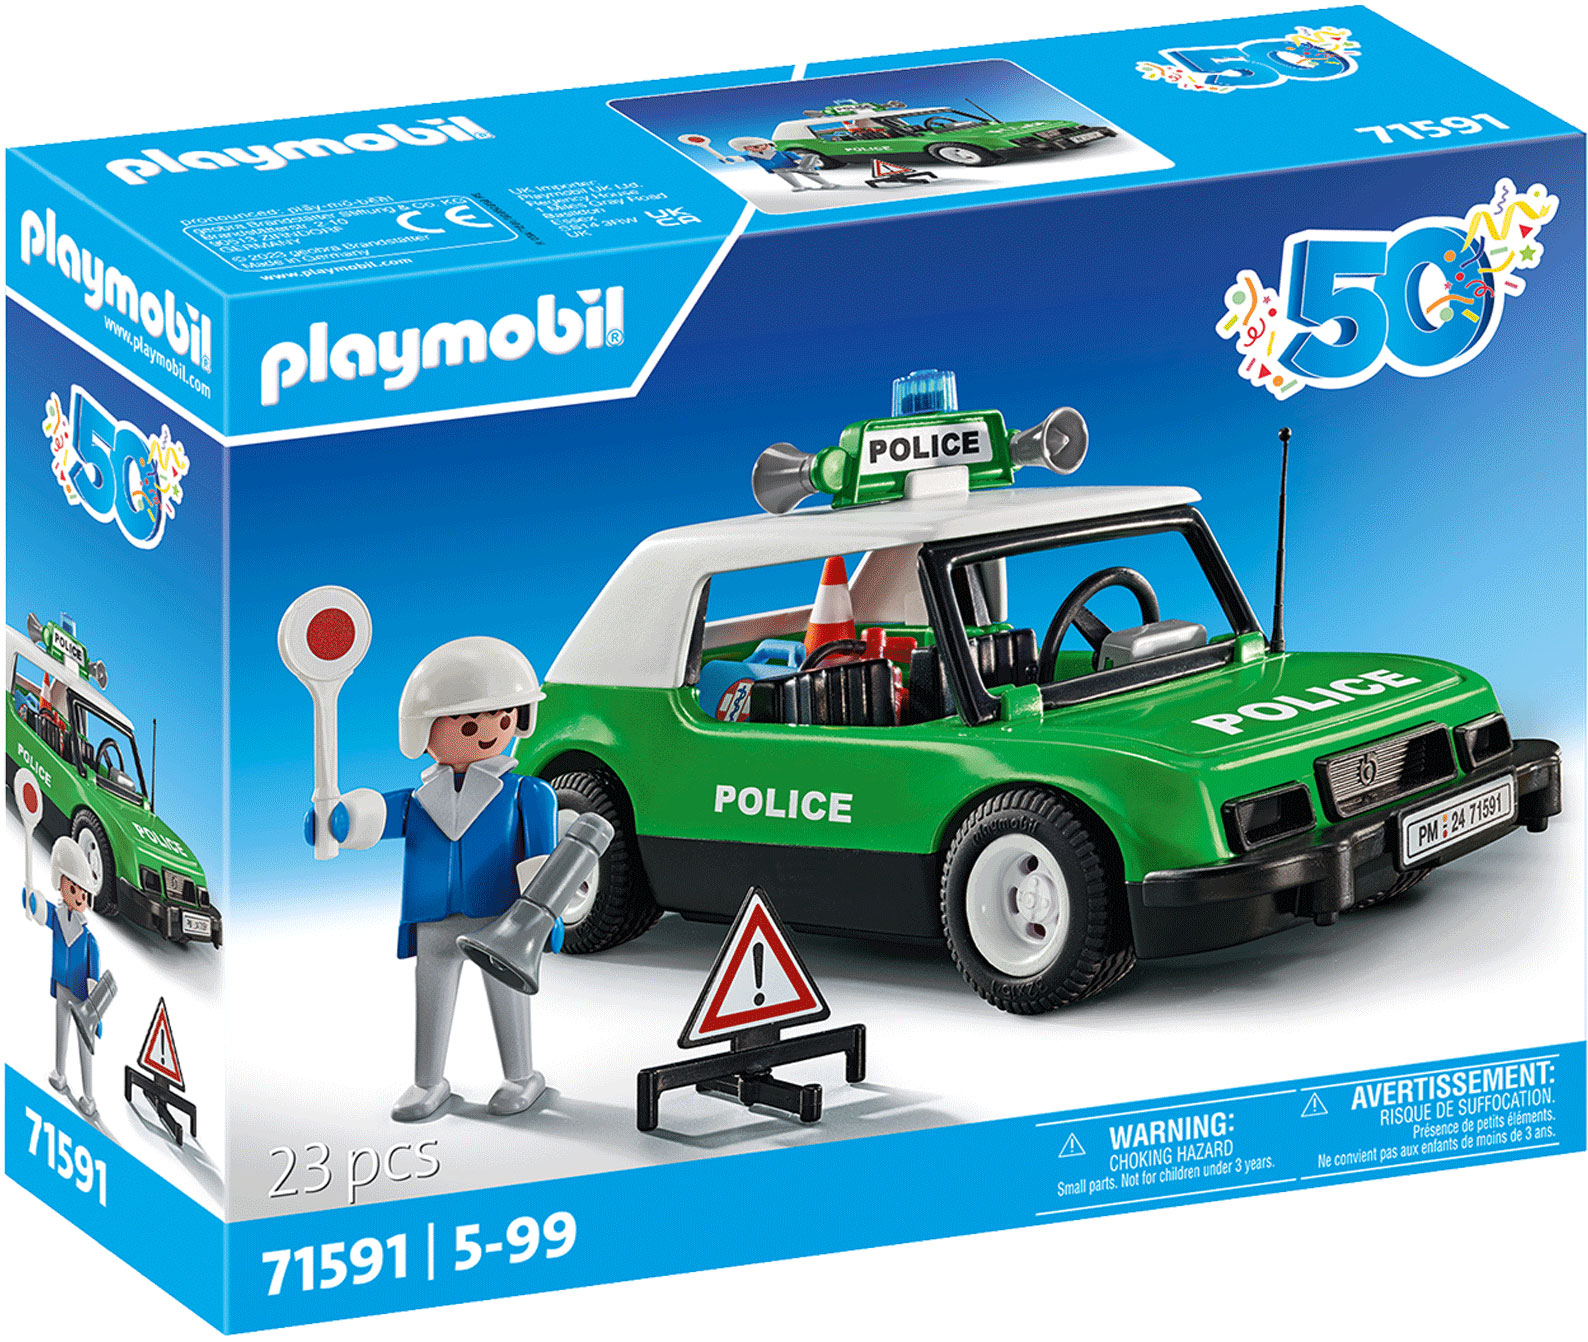 Playmobil Policiers 71591 pas cher, Voiture de police collector